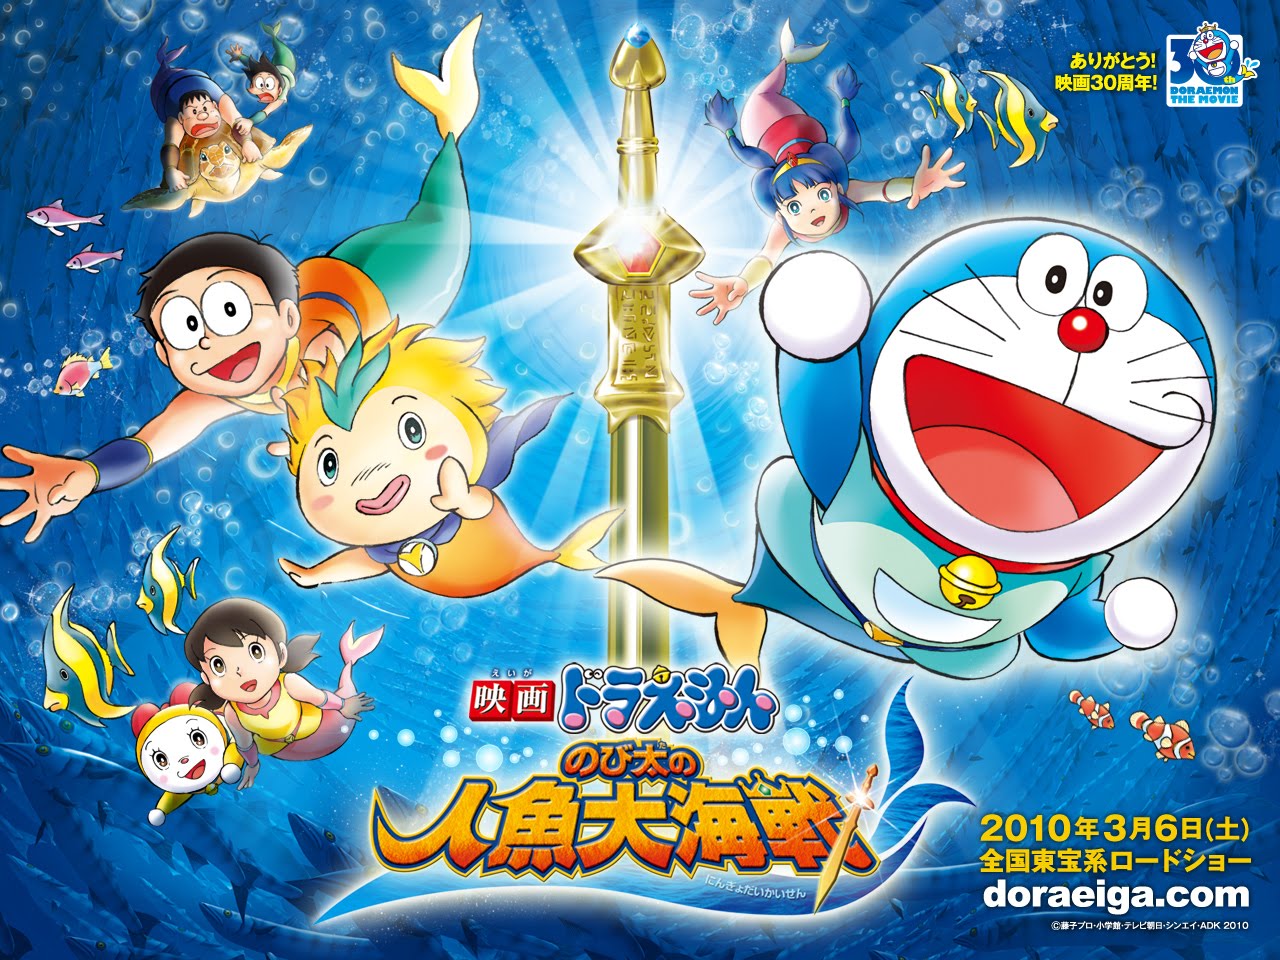 Foto Animasi Bergerak Lucu Doraemon Terbaru Display Picture Lucu